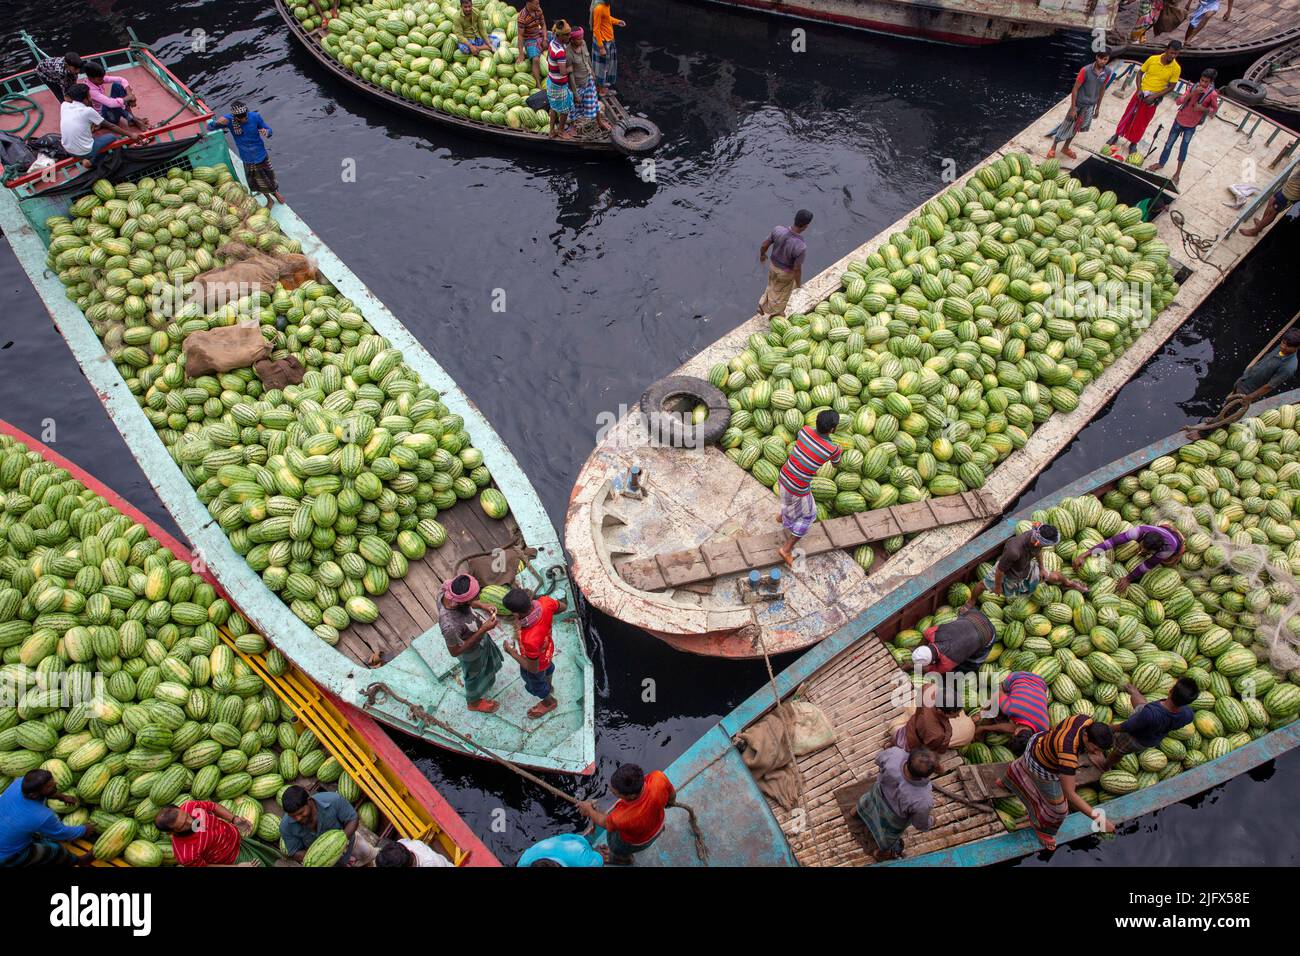 Boats packed with watermelons anchored Dhaka's Badamtali Fruit Market terminal, later than usual, increasing supplies. Dhaka, Bangladesh Stock Photo